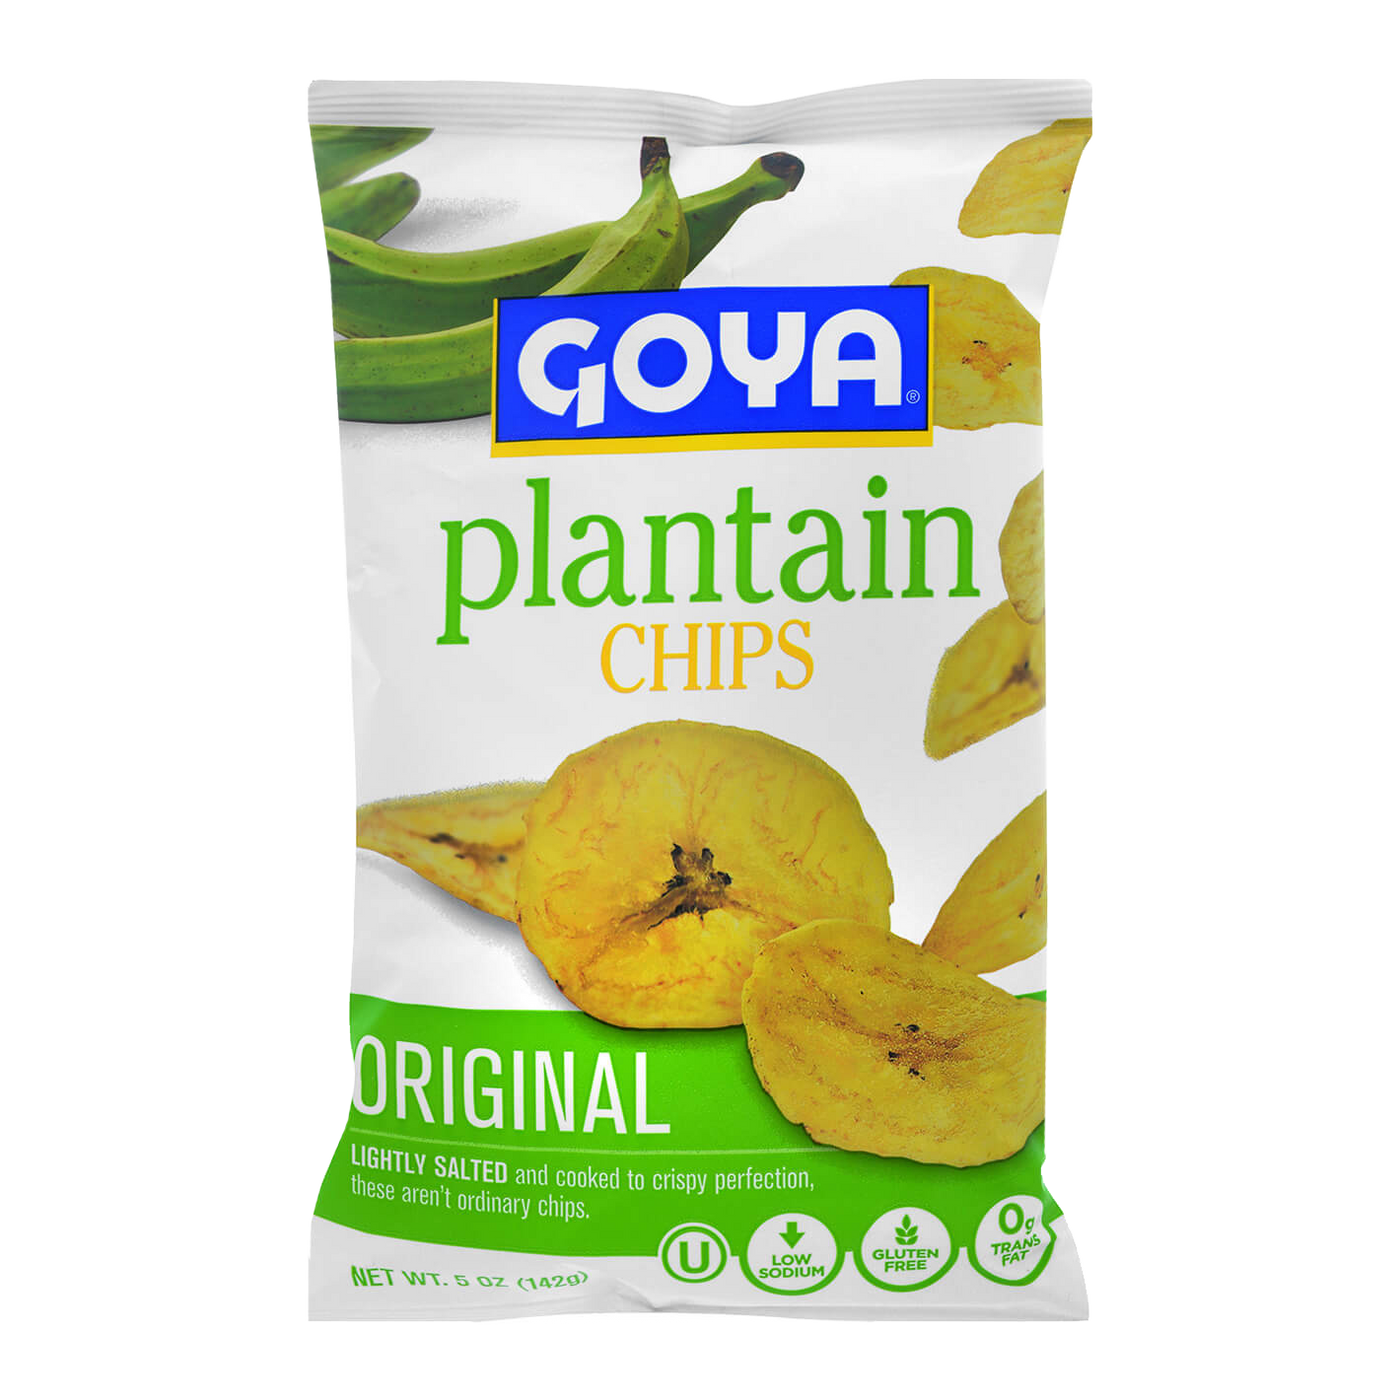   Goya Plantain Chips Original